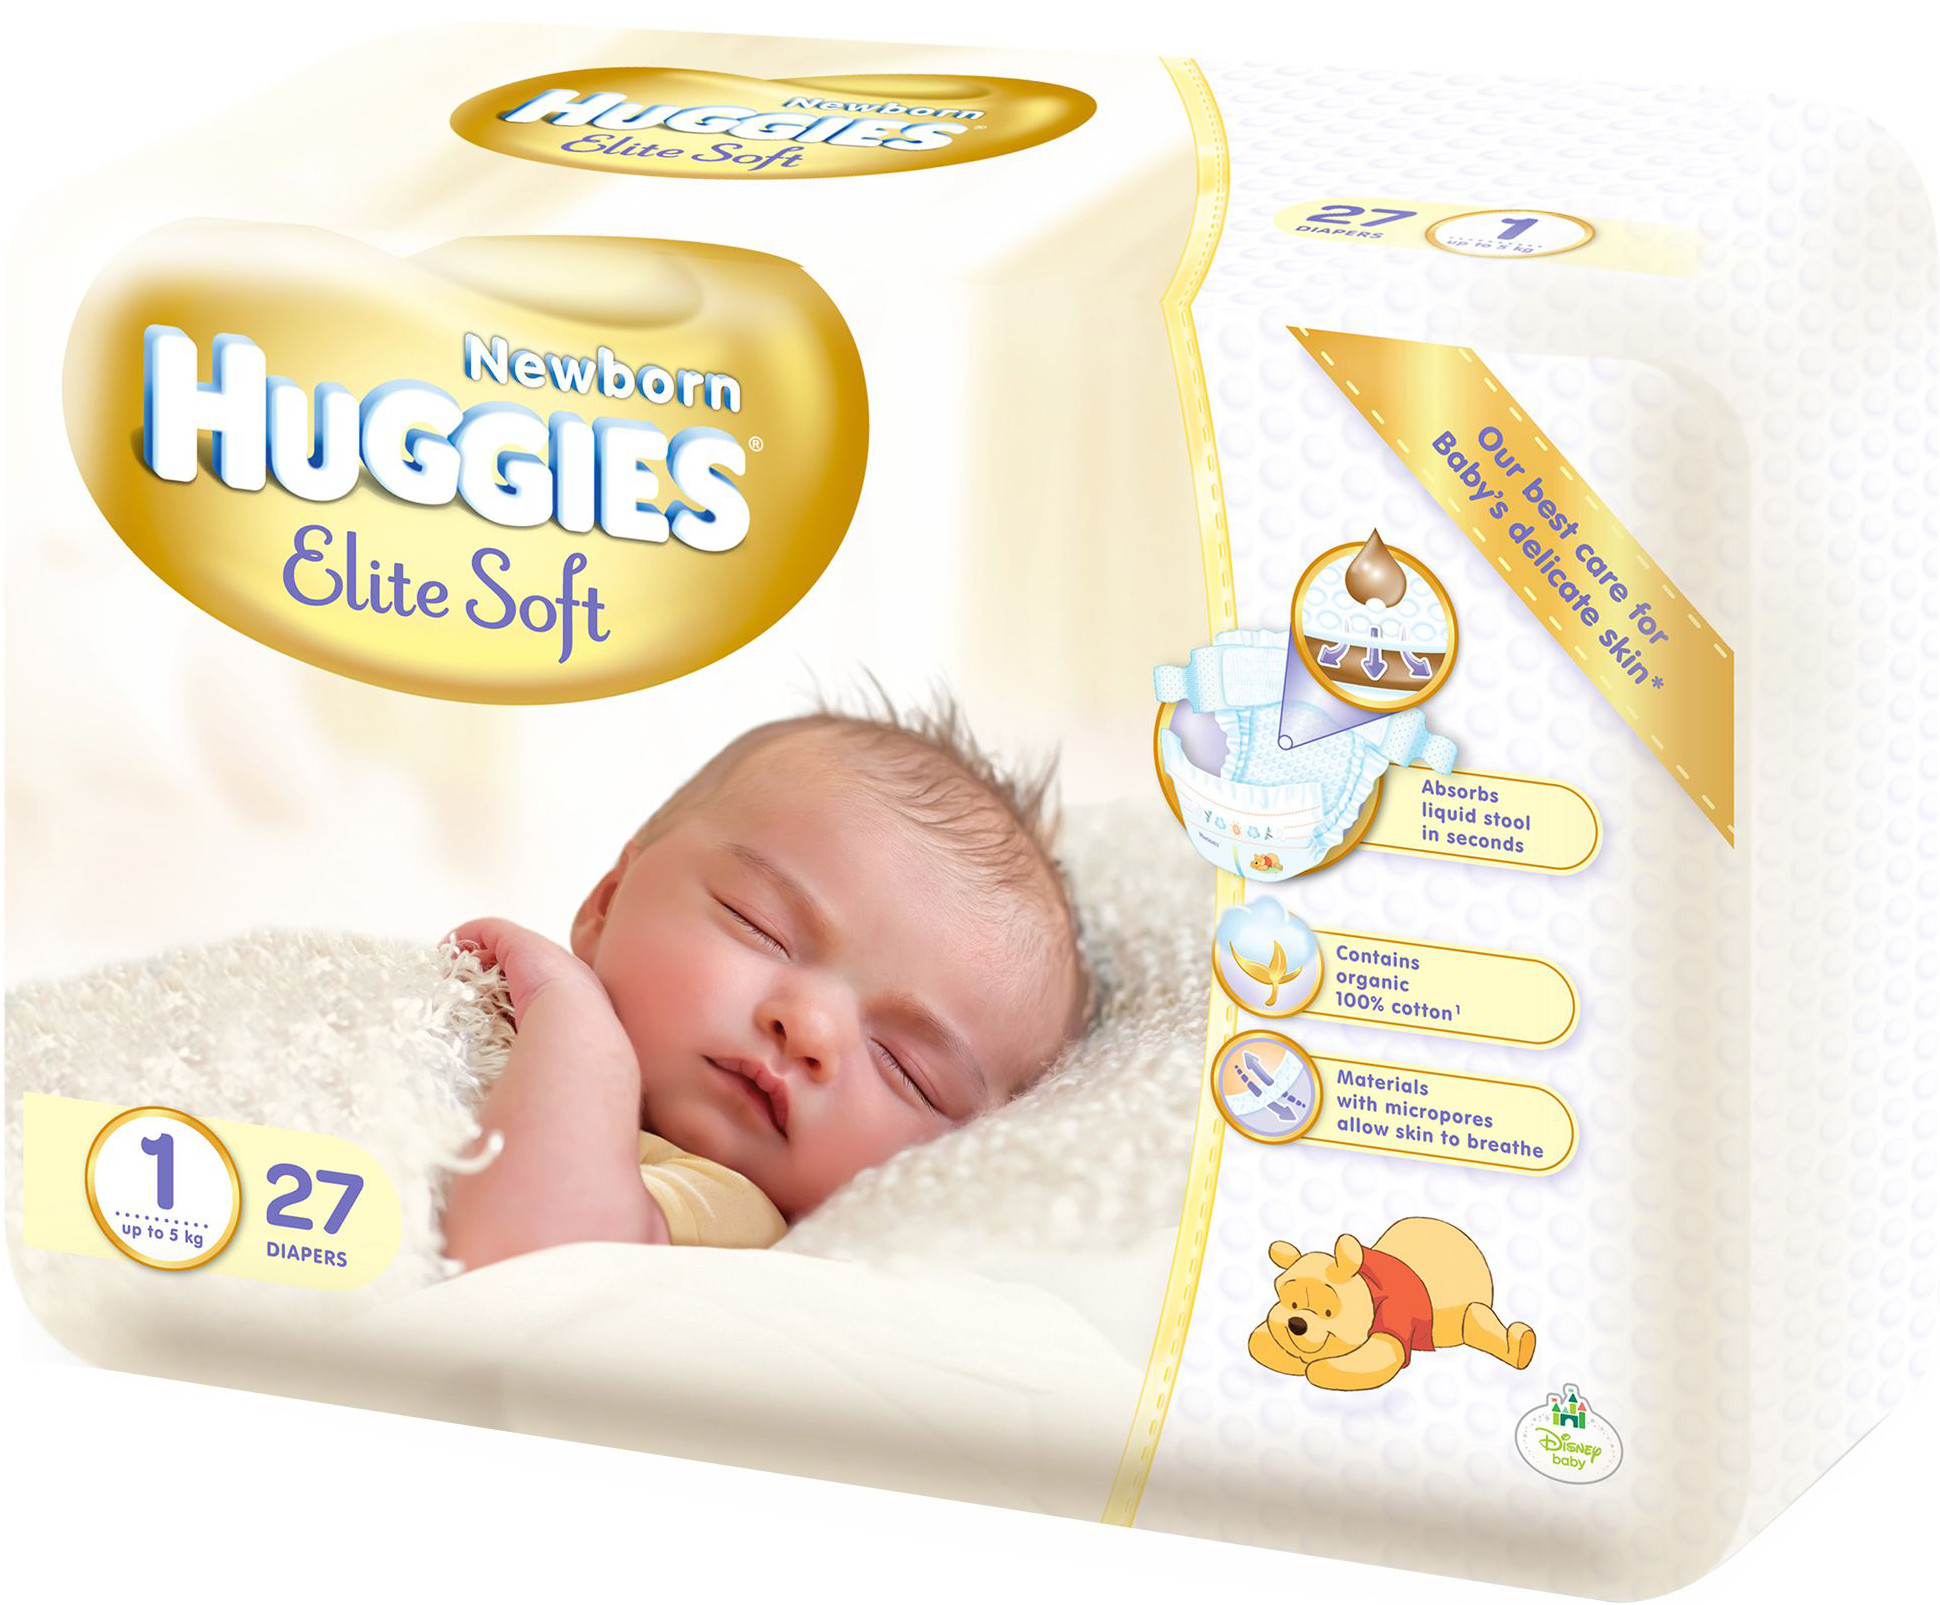 Huggies Elite Soft diapers 1 (3-5 kg) 84 pcs, Distributes, diapers